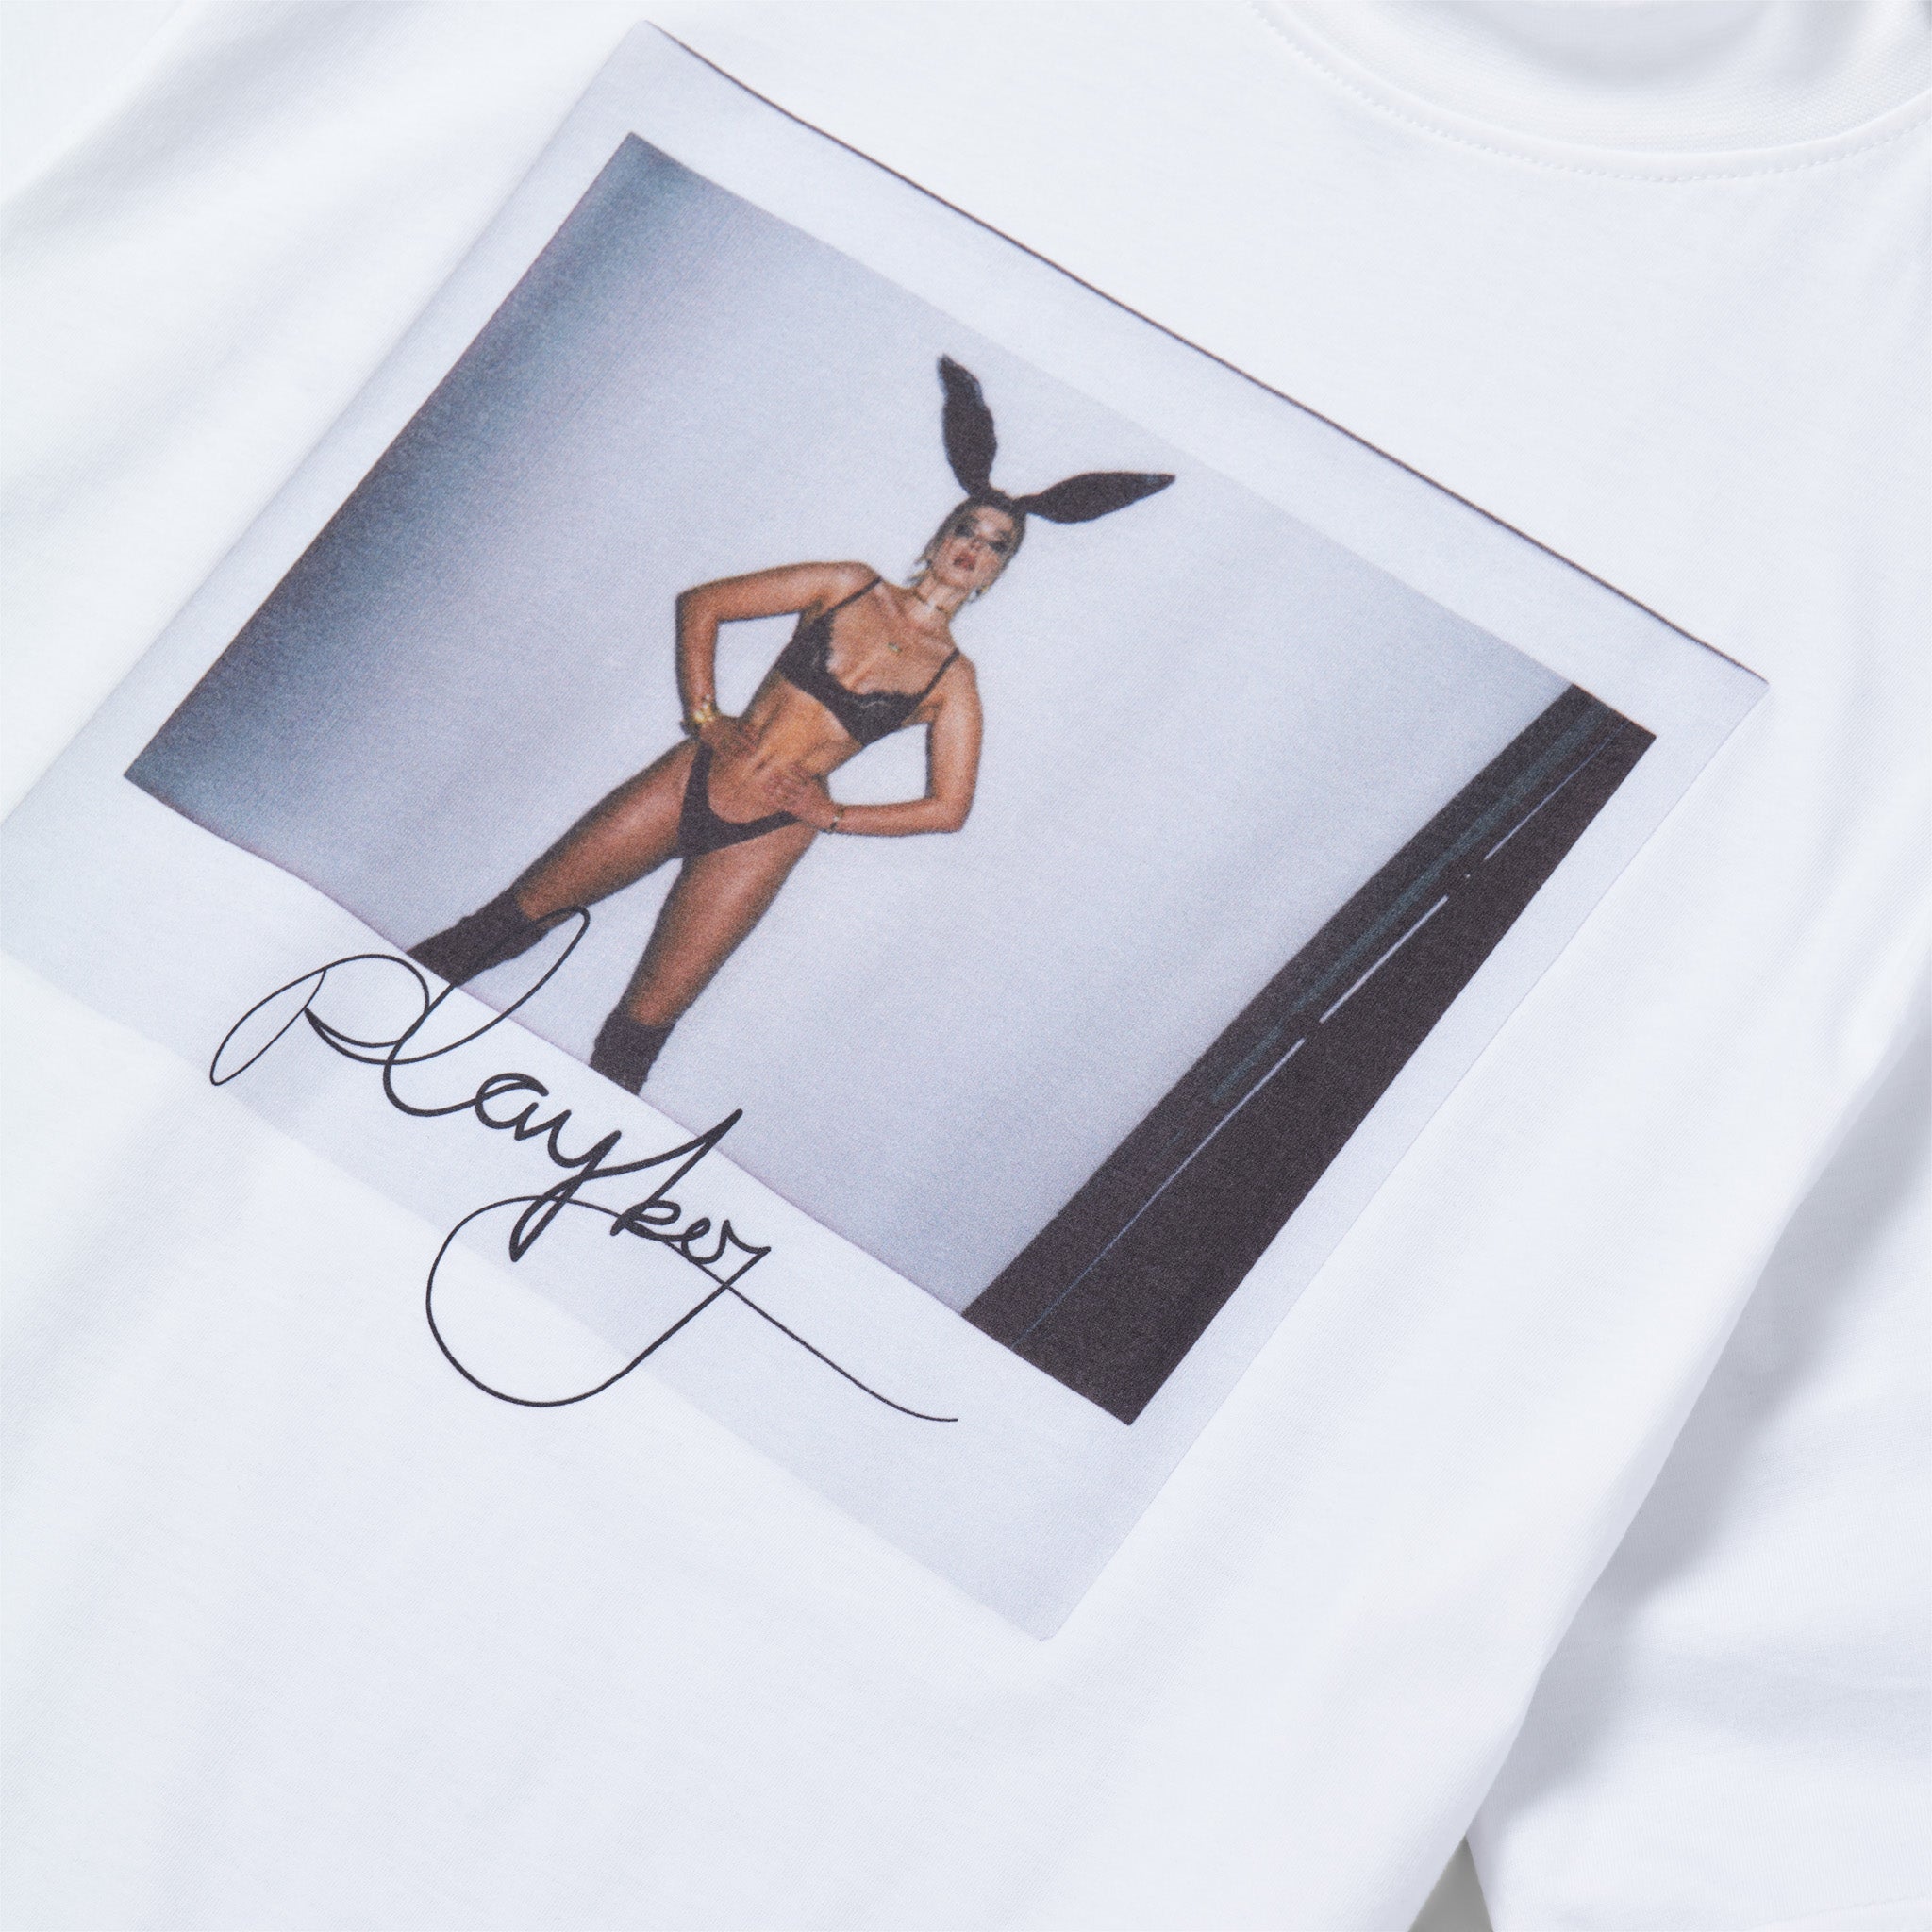 November 2020 Playmate Khrystyana Polaroid Print T-Shirt